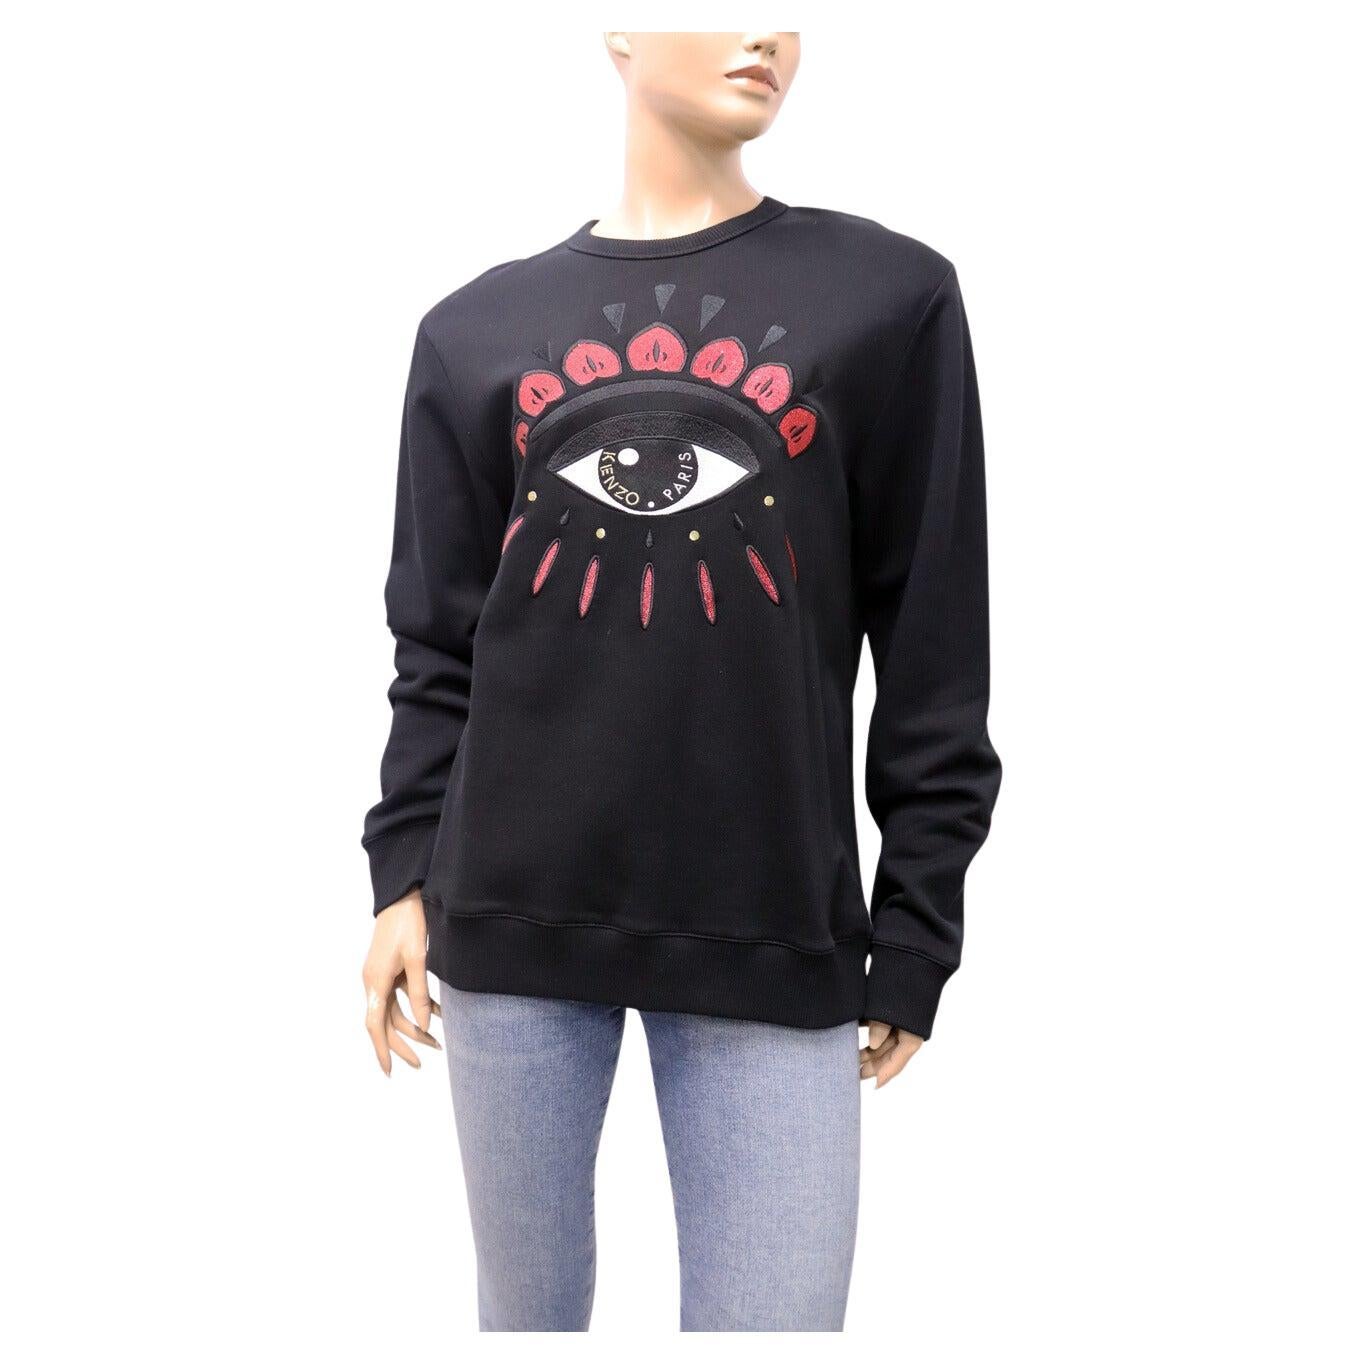 Kenzo Black Eye Motif Sweatshirt Size Medium For Sale